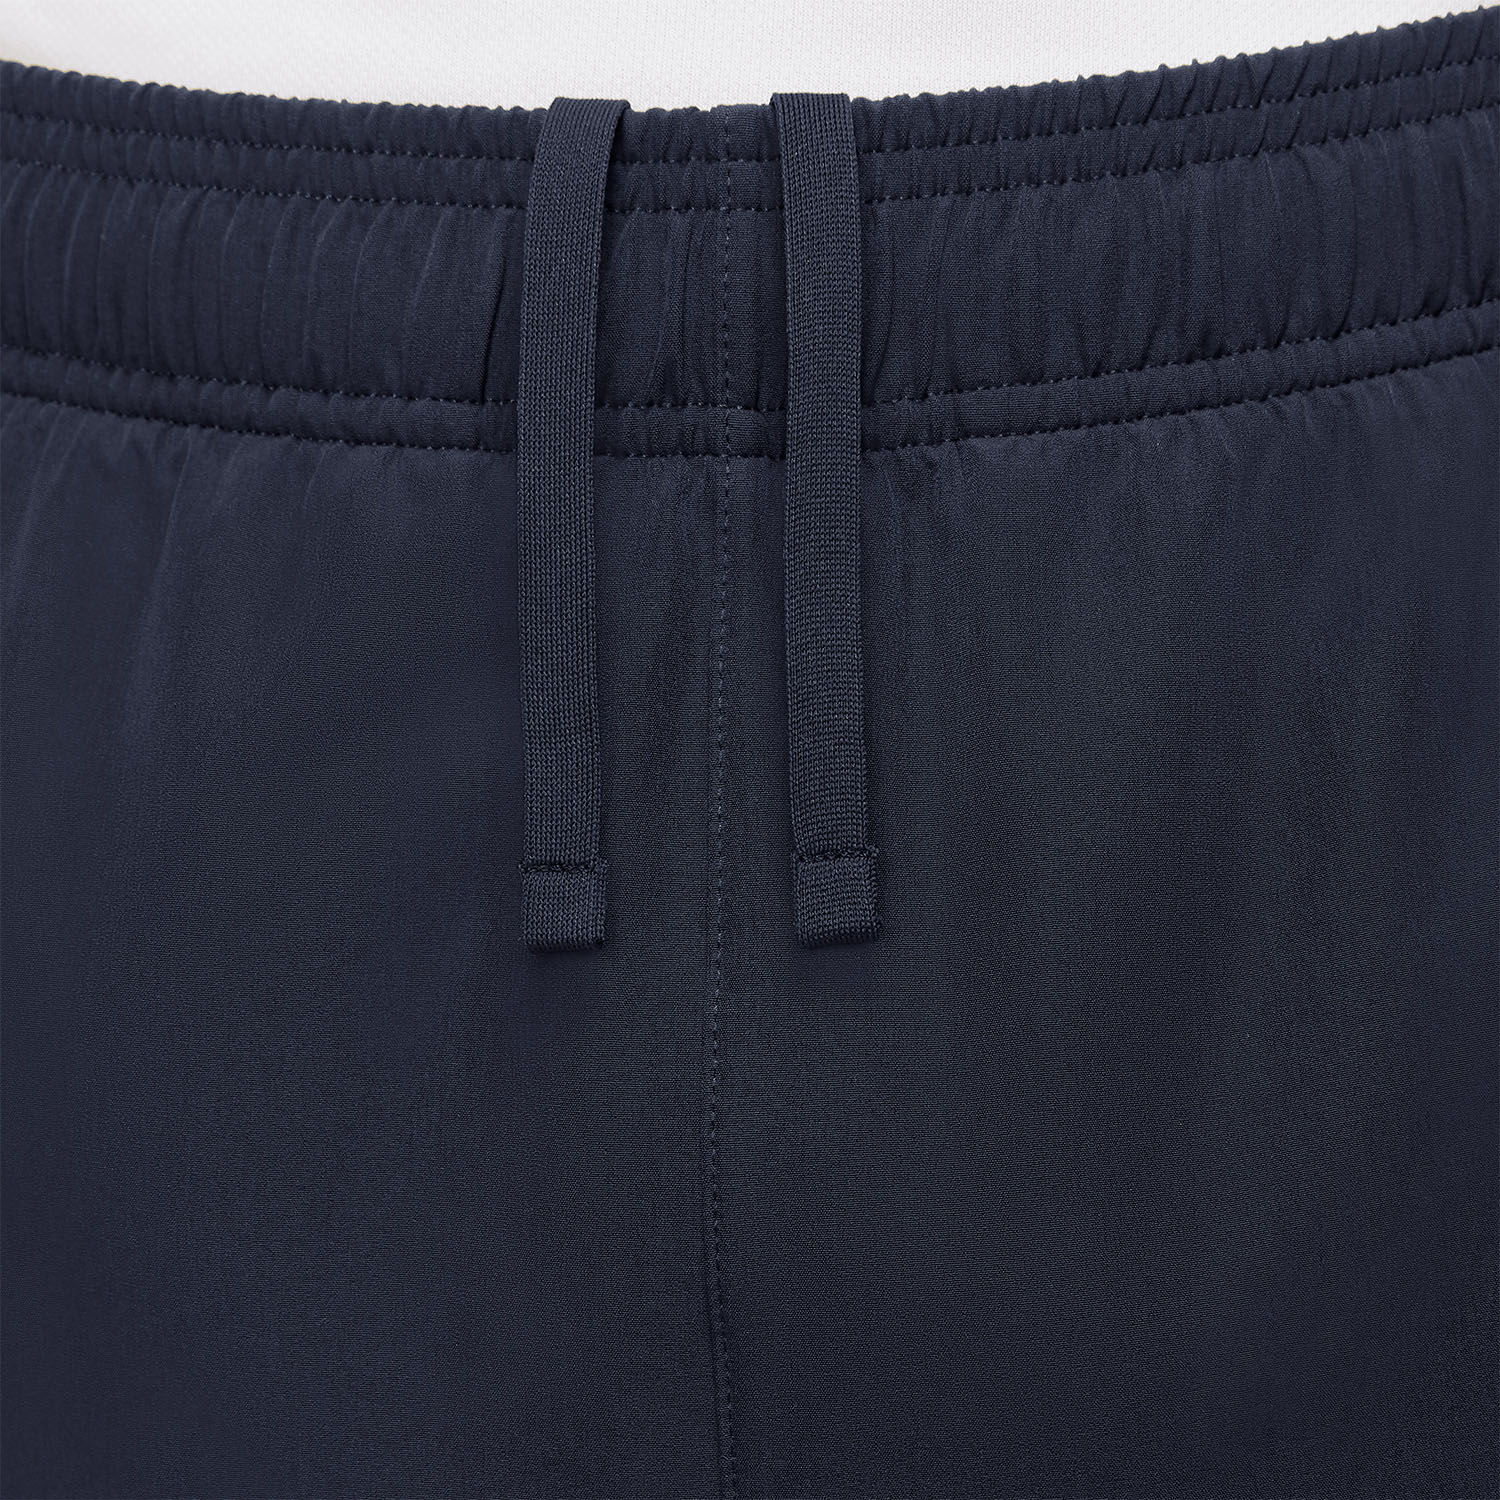 Nike Court Advantage Pantalones - Obsidian/White